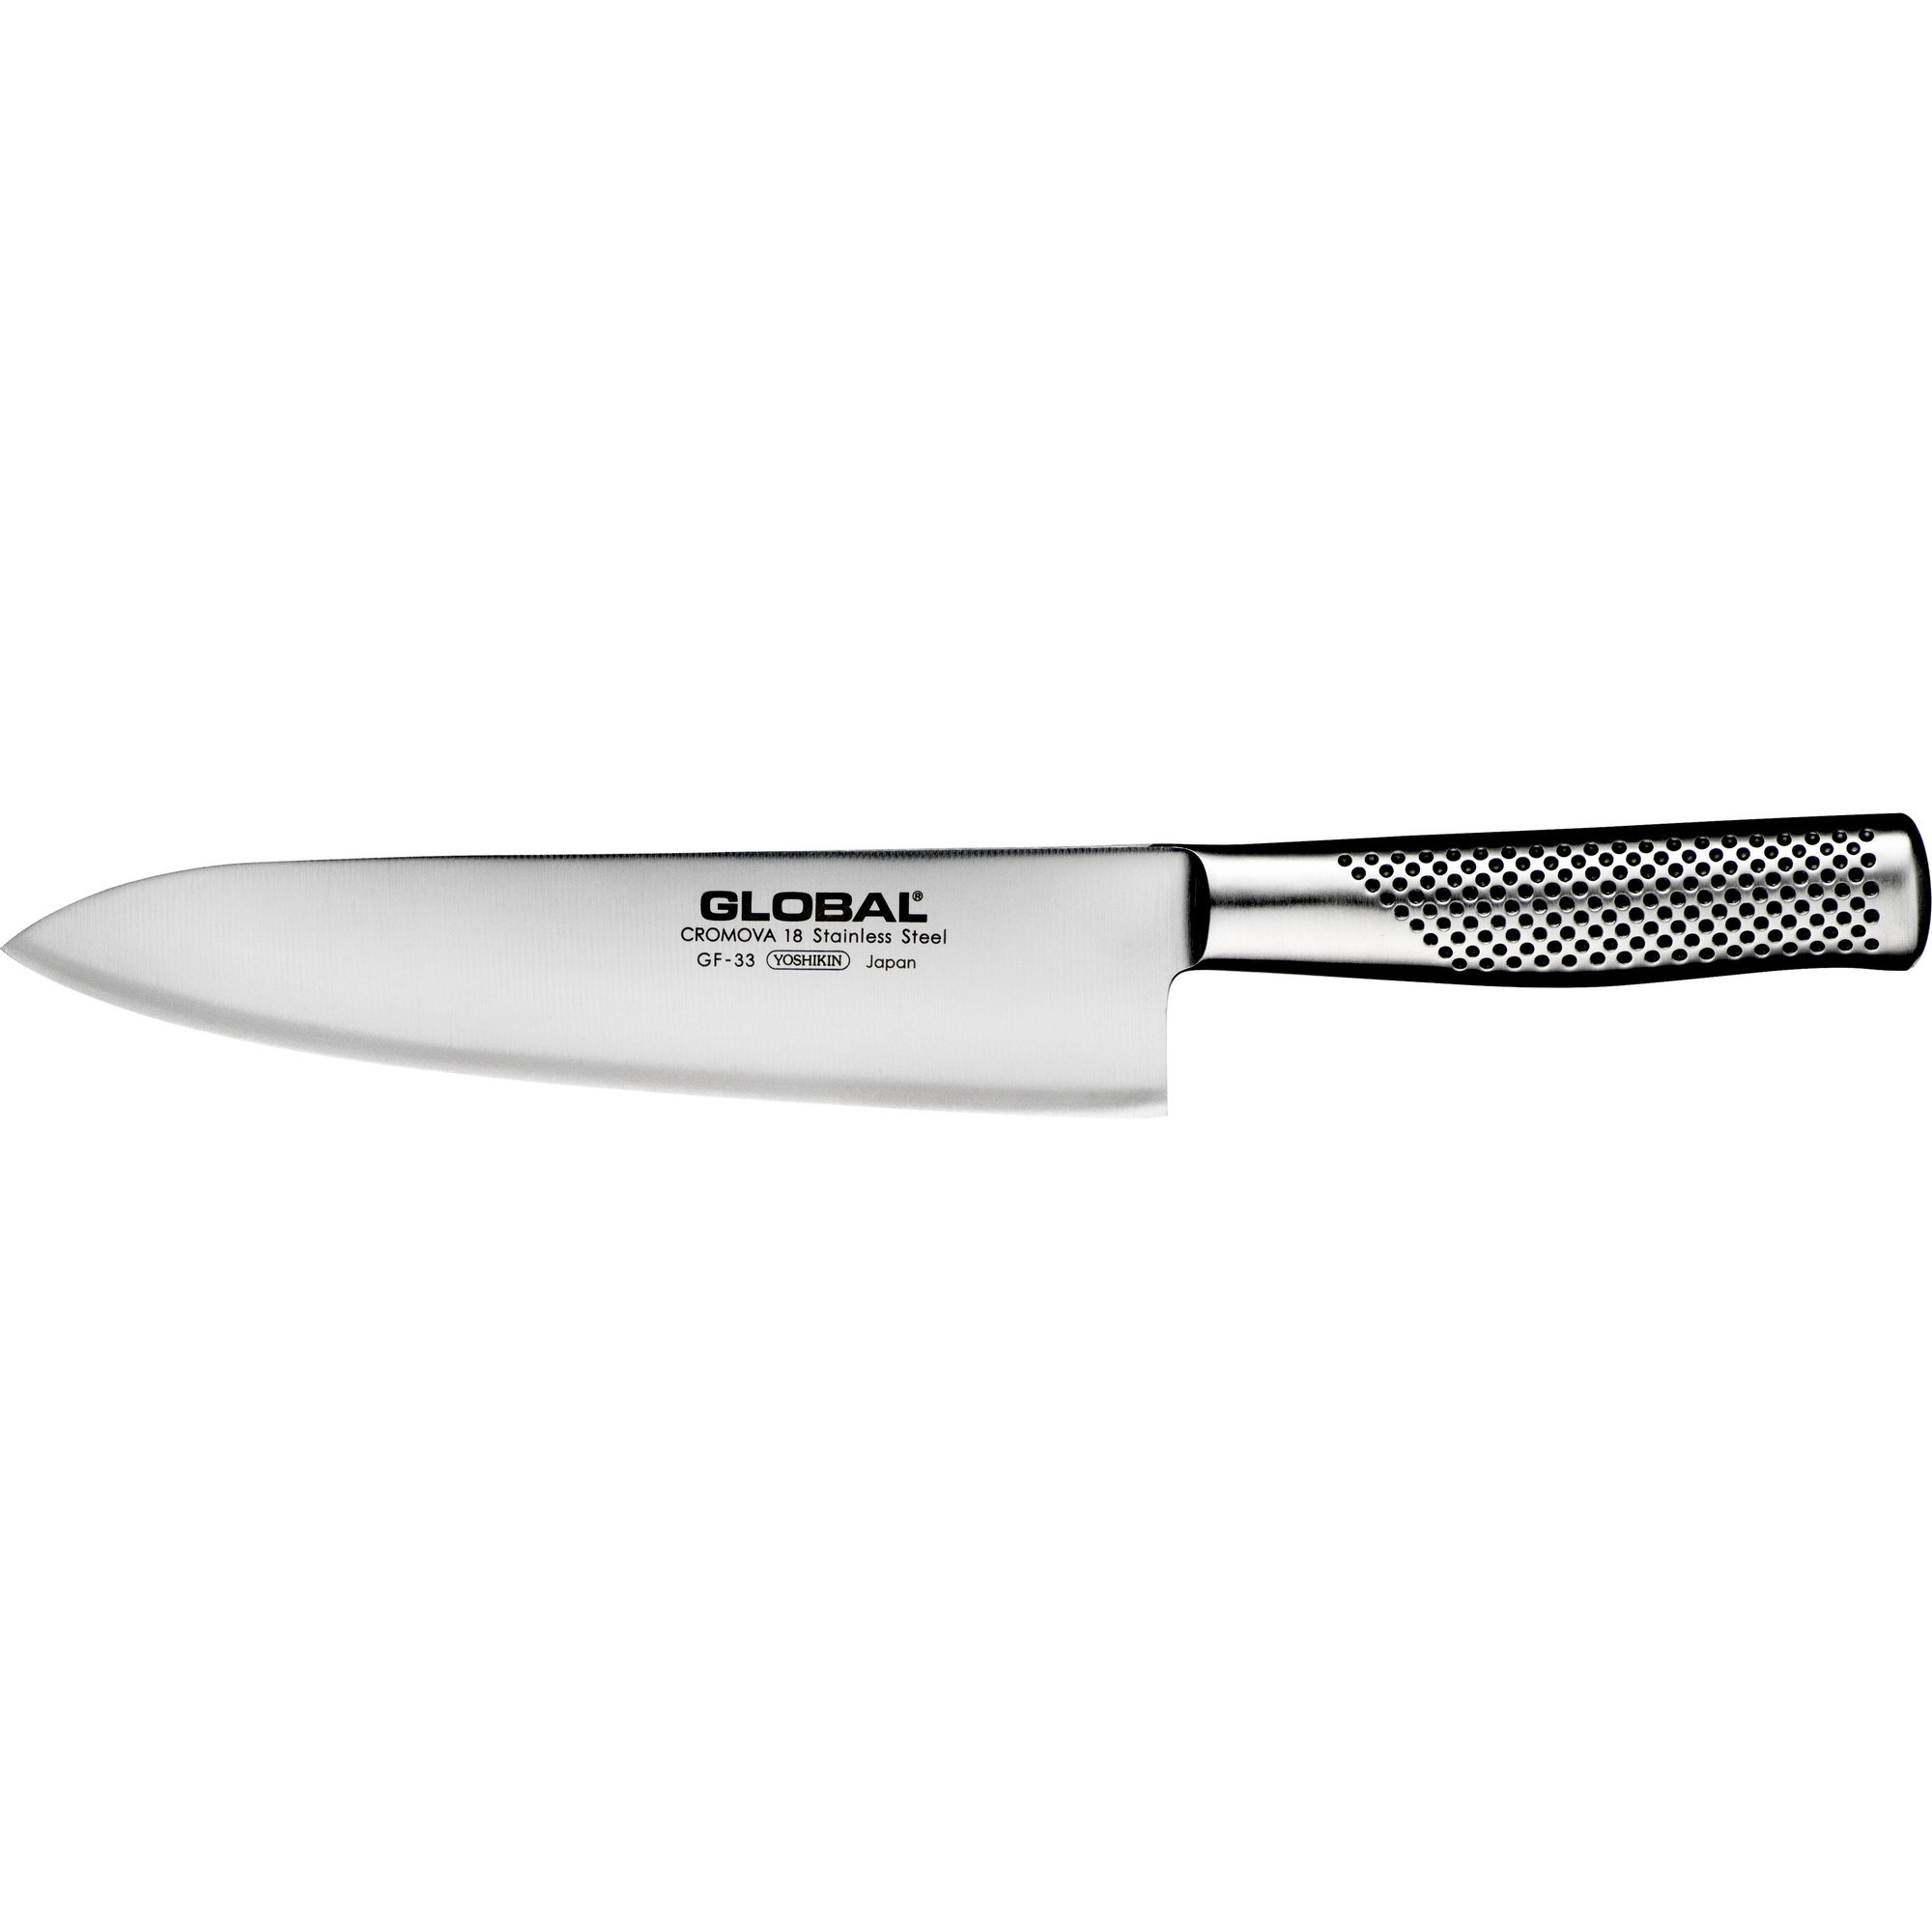 Global GF-33 kokkekniv